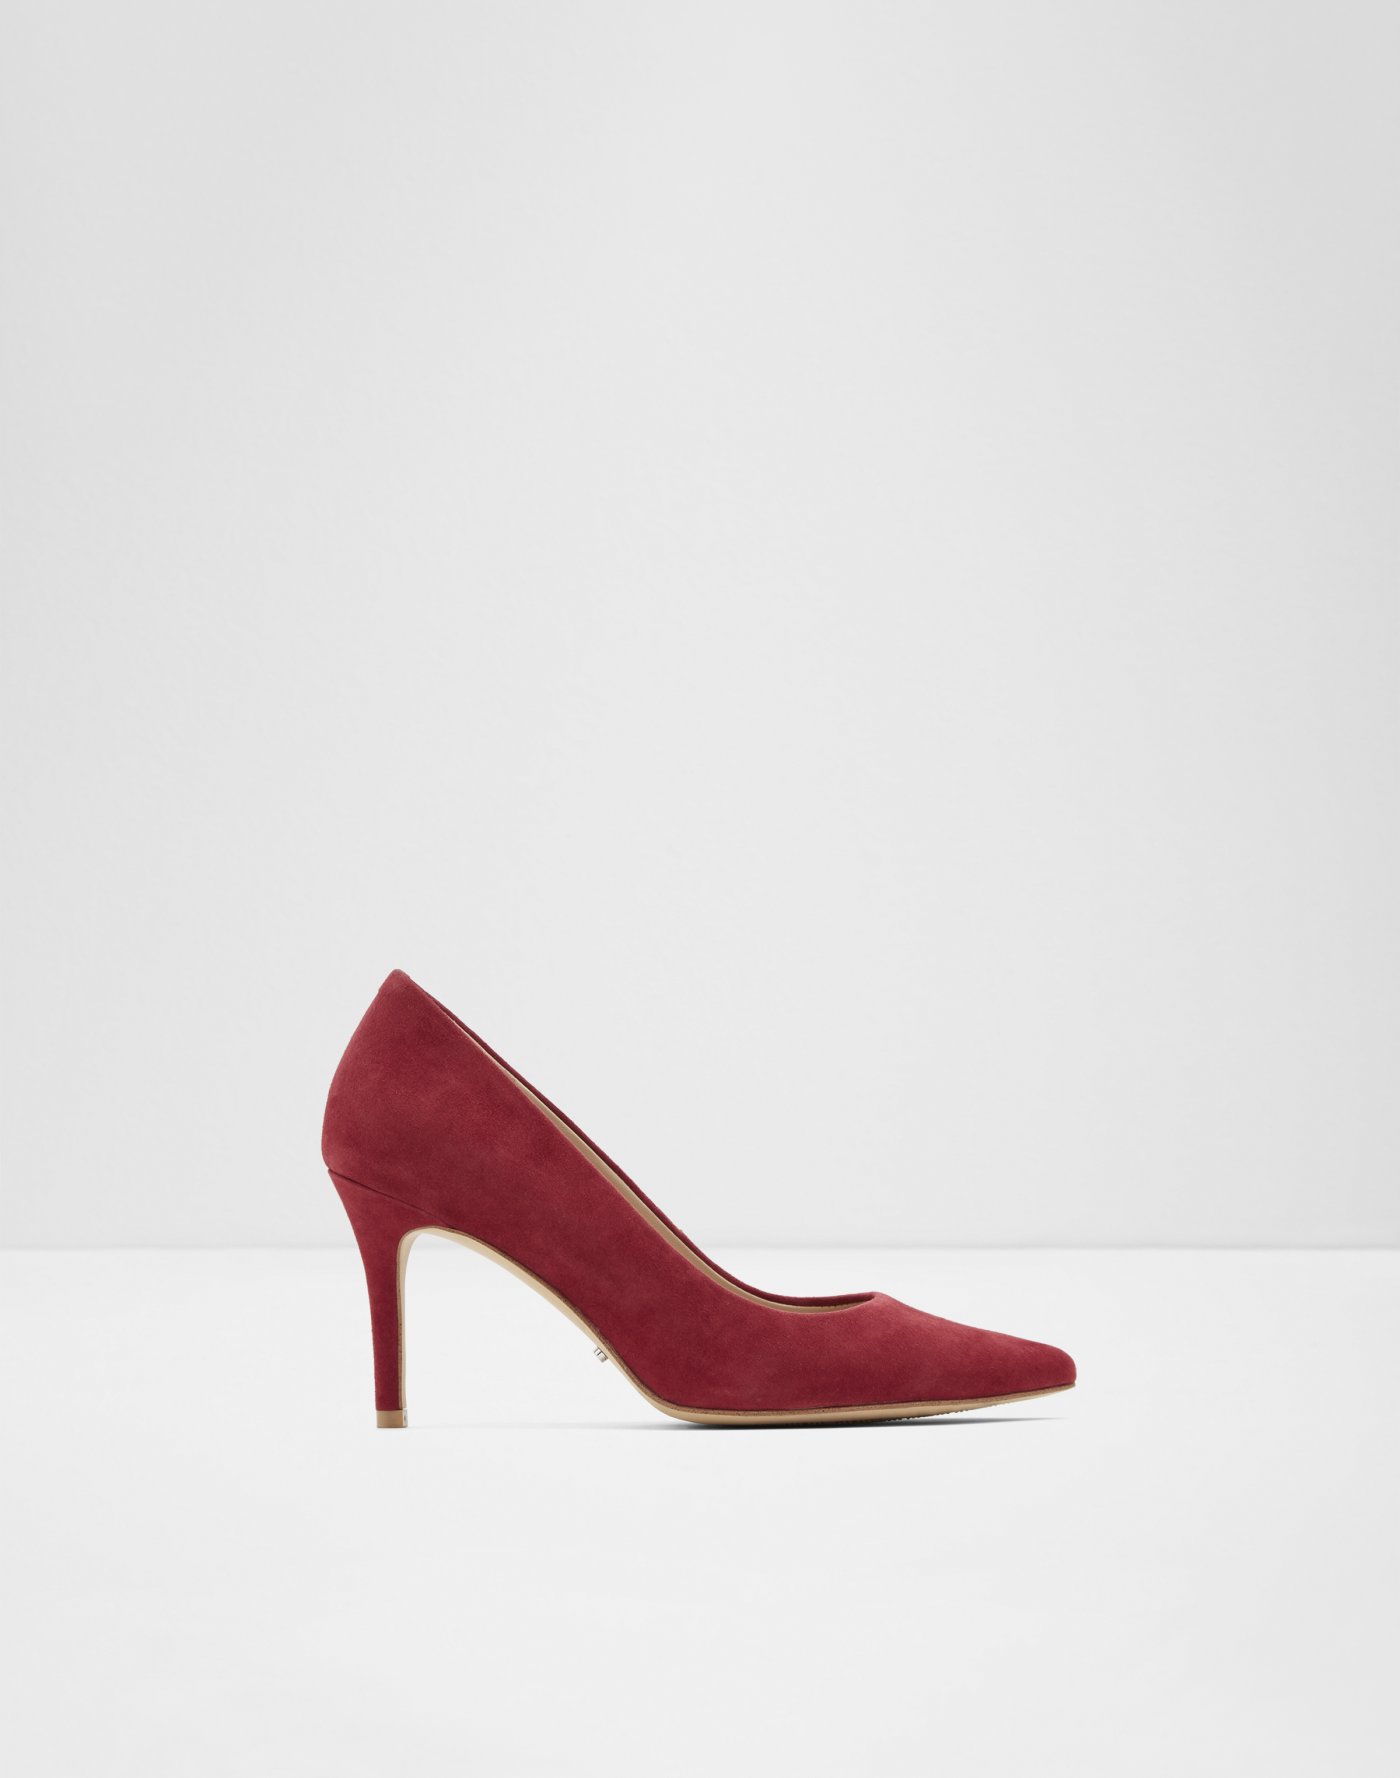 Low-mid heels | ALDO Canada